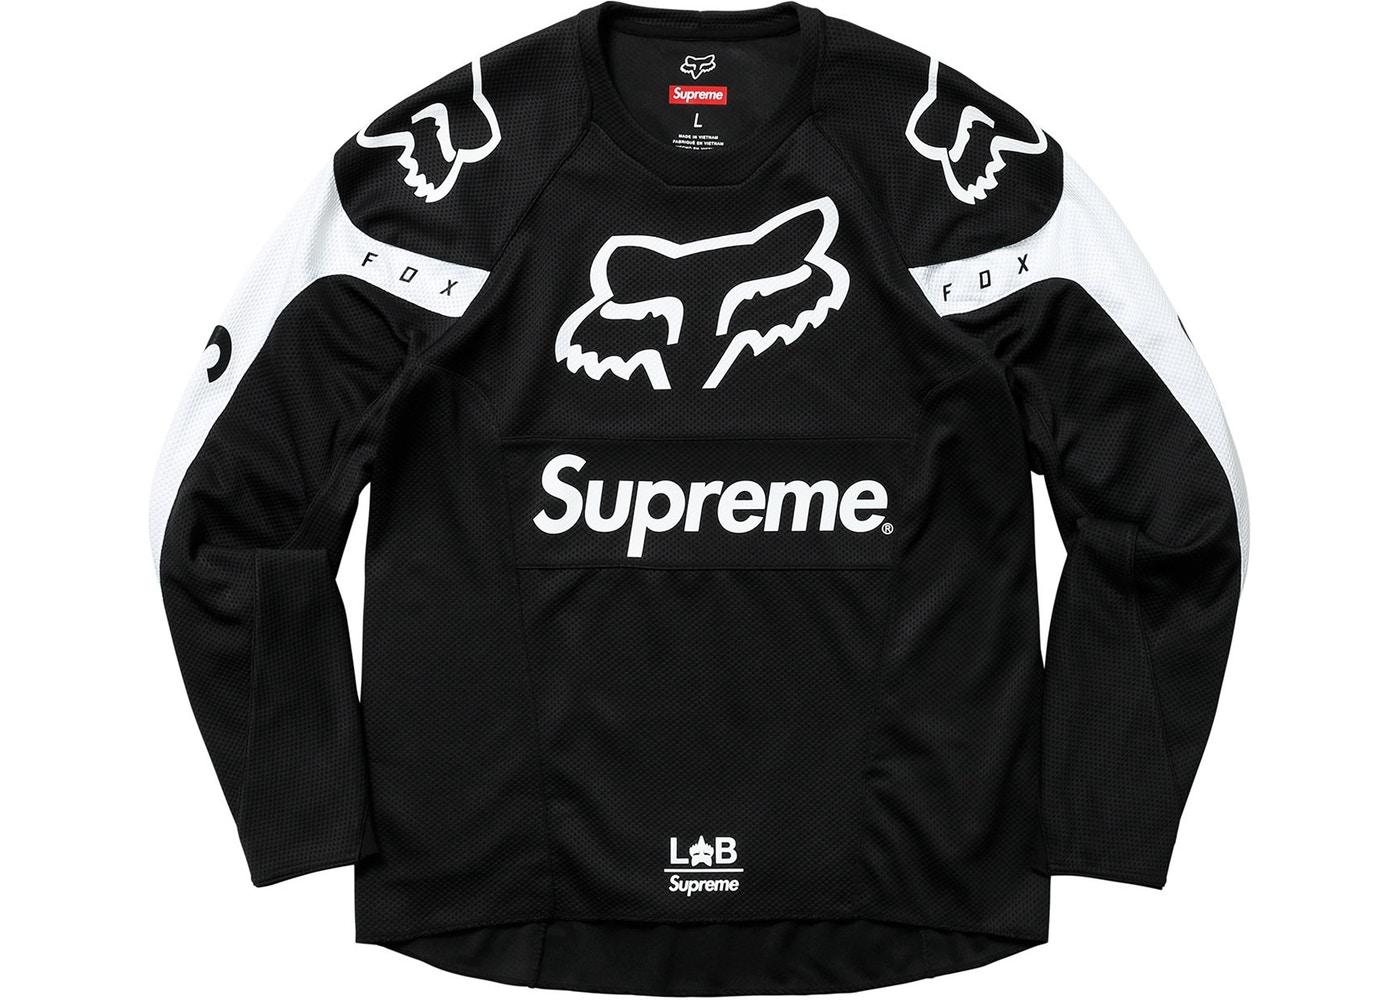 Supreme Fox Racing Moto Jersey Top Black